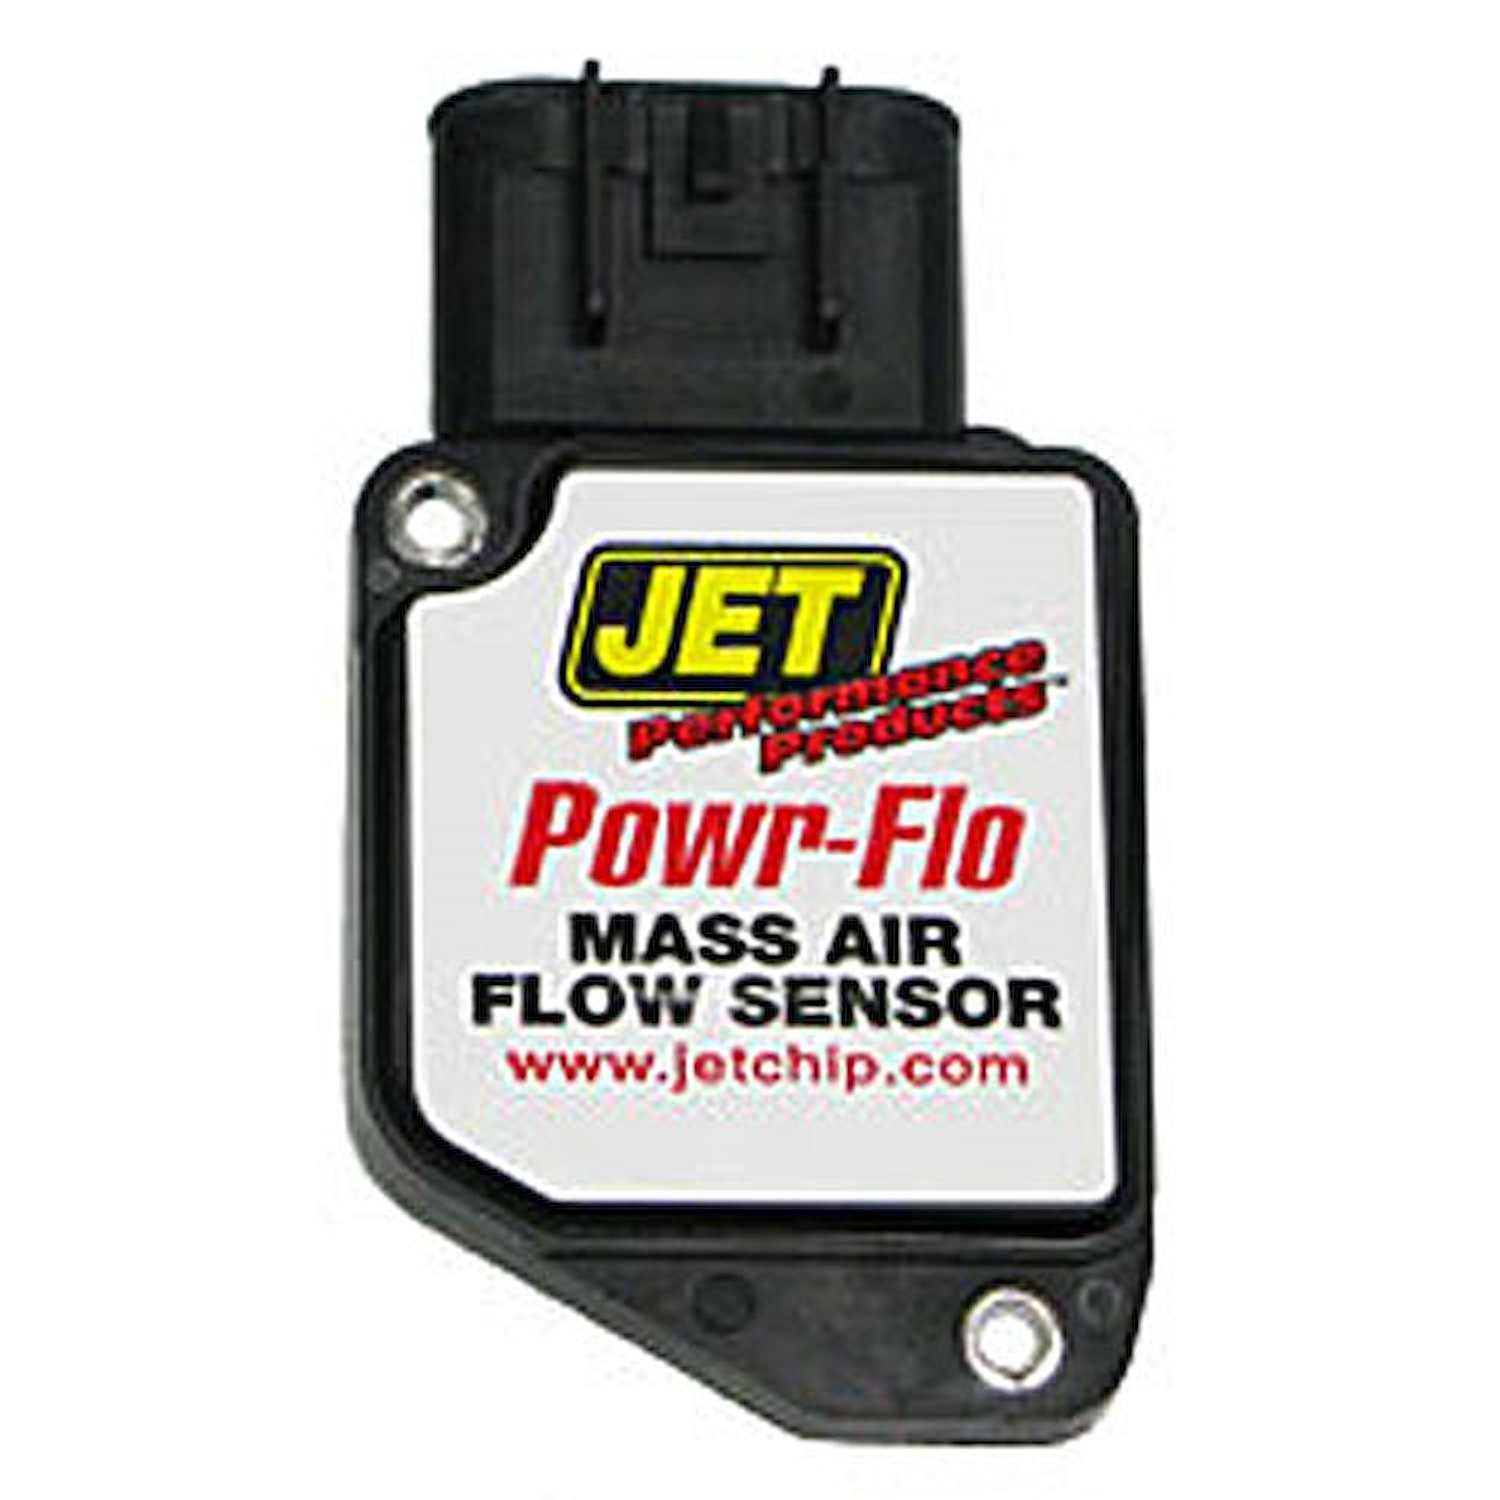 Powr-Flo Mass Air Sensor 2004-2006 Chevy Colorado & GMC Canyon 2.8L/3.5L